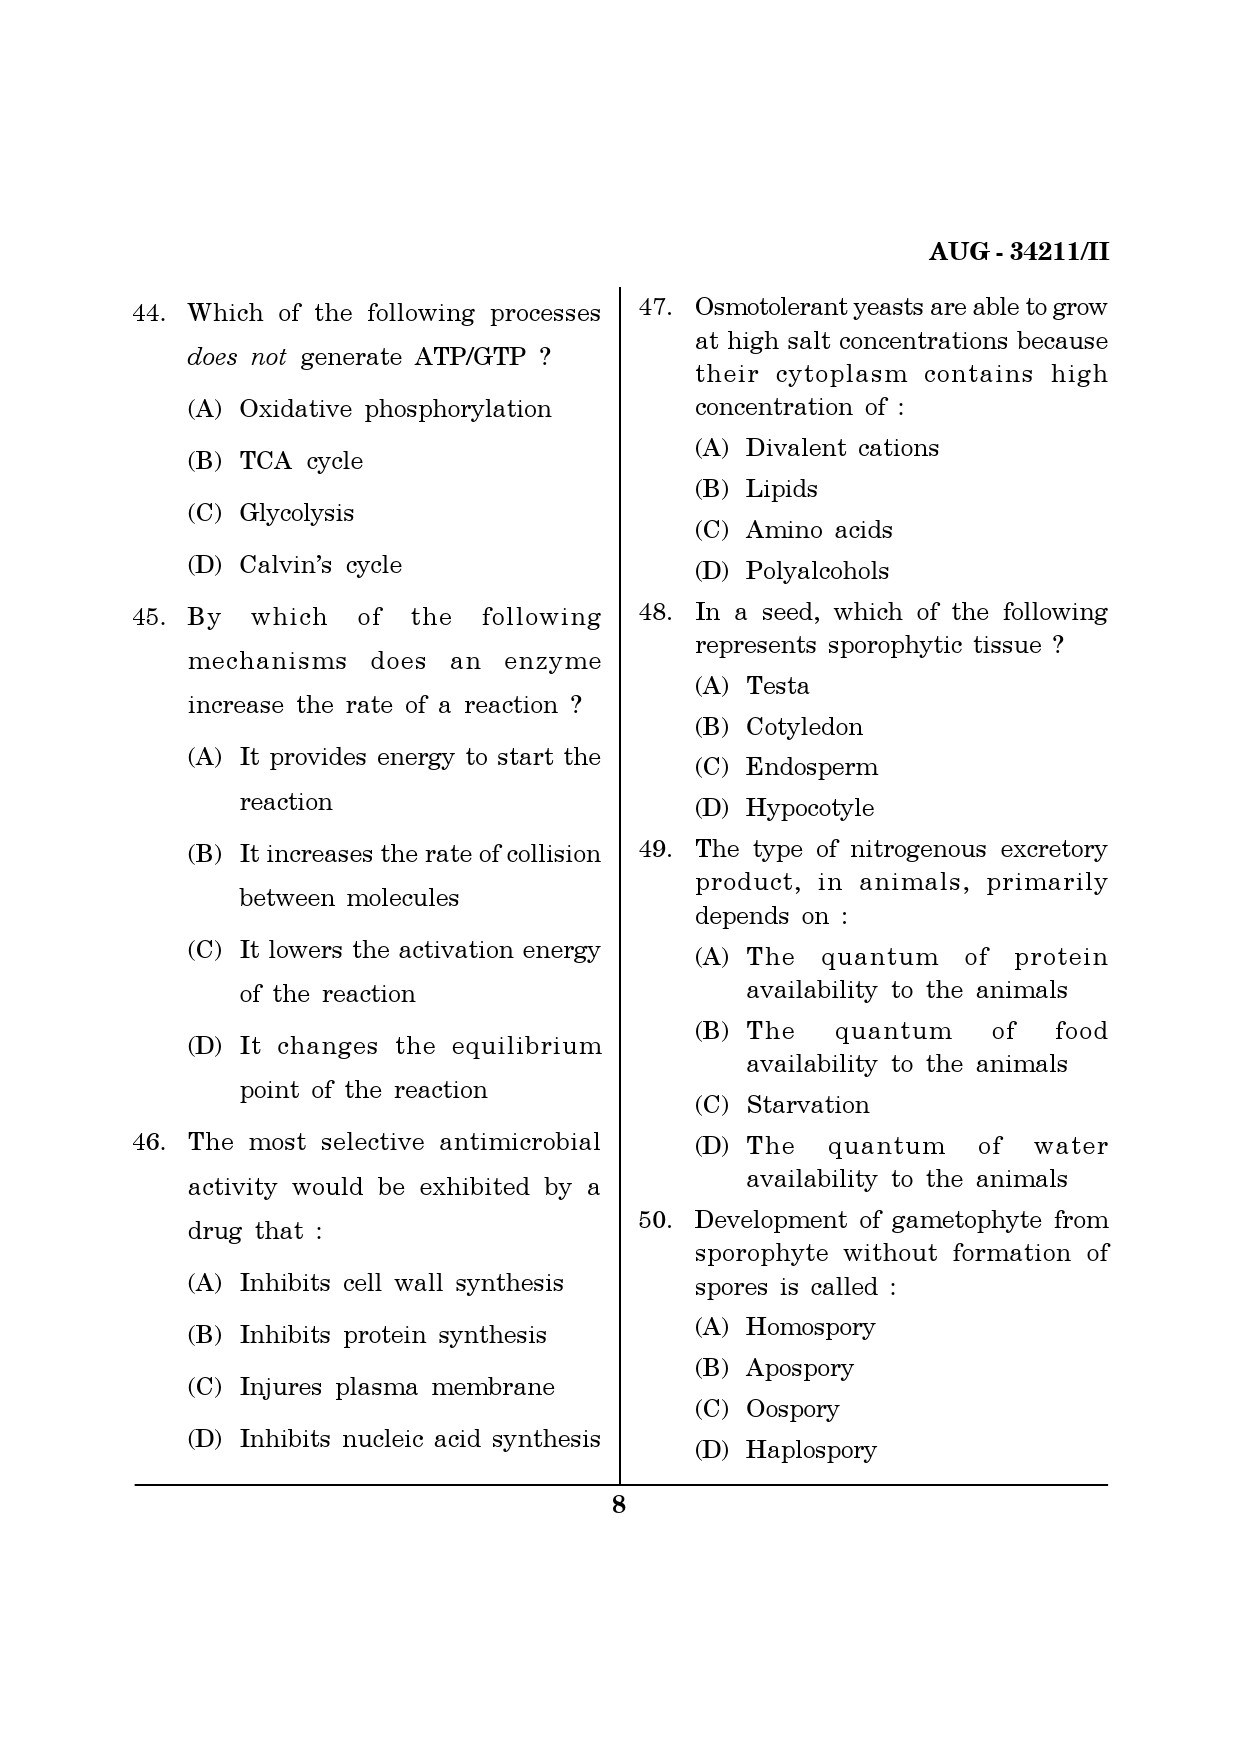 Maharashtra SET Life Sciences Question Paper II August 2011 8